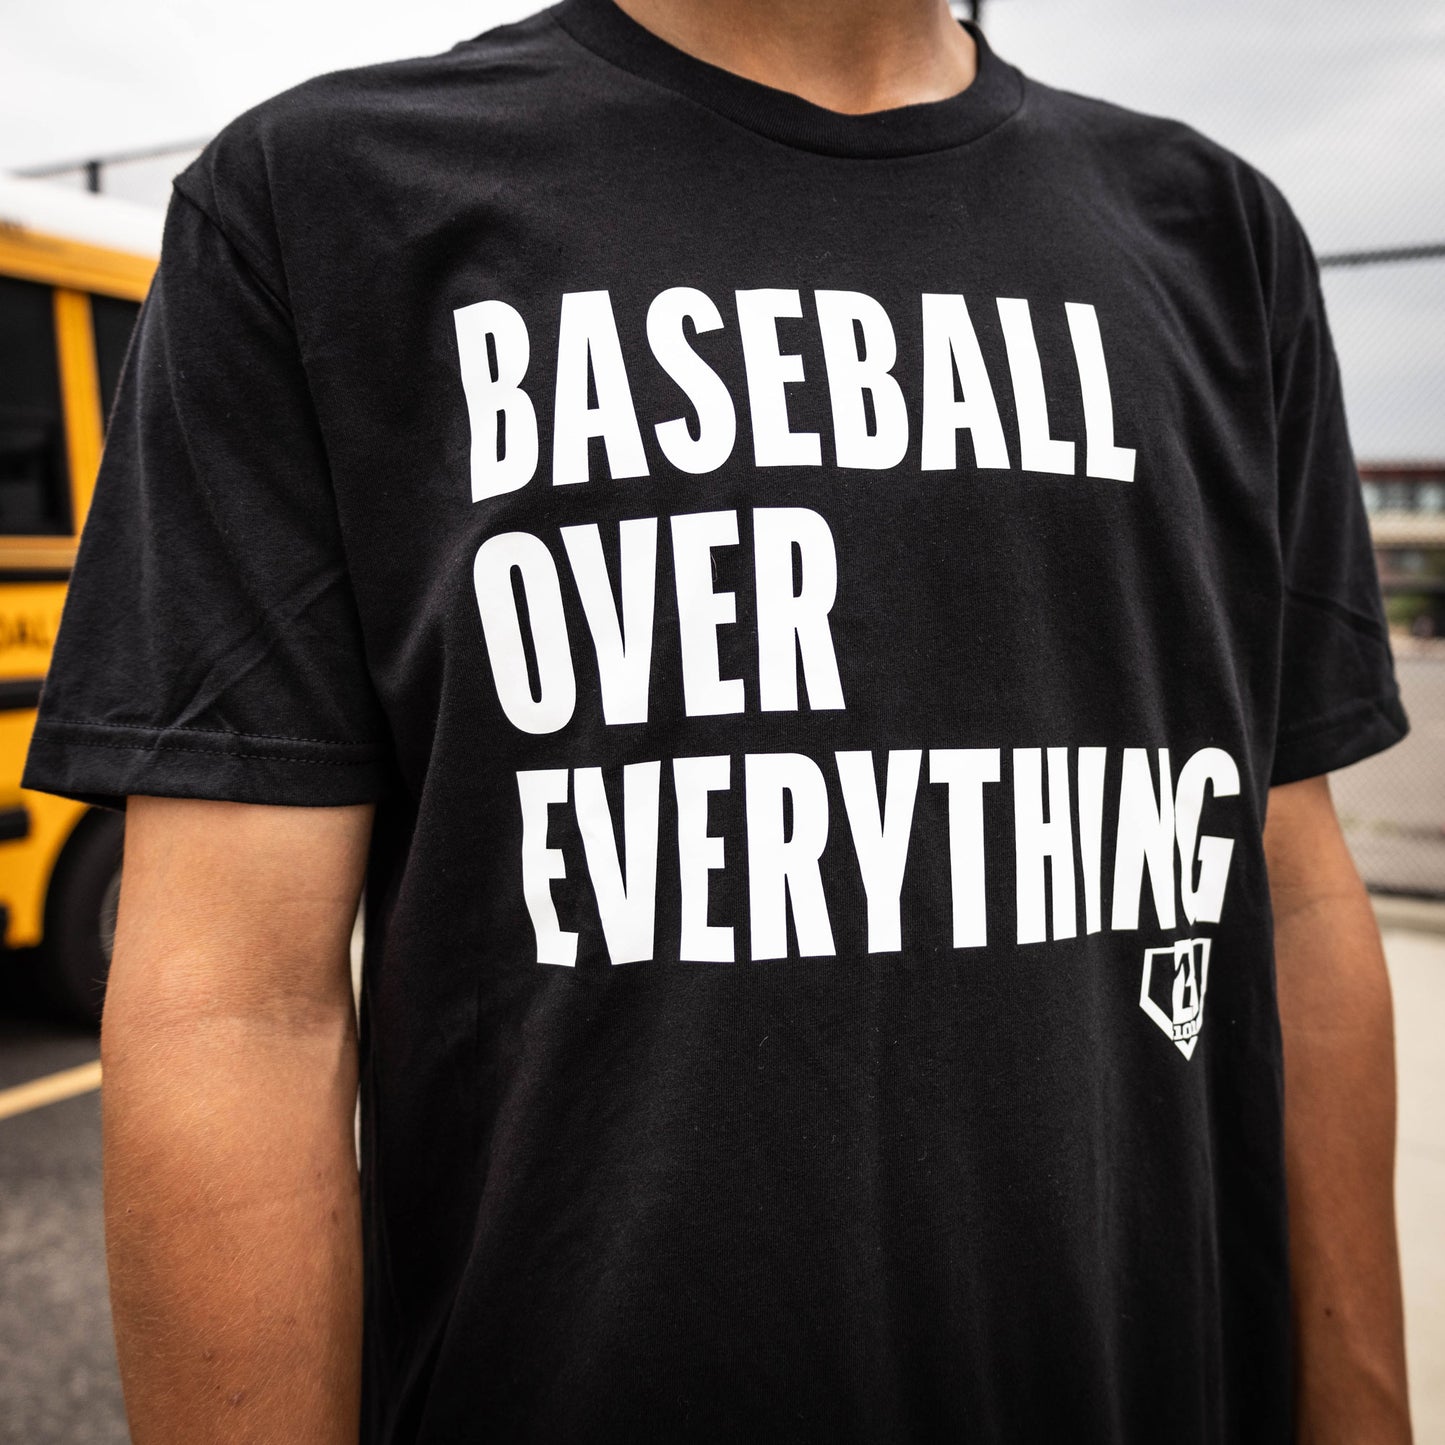 Baseball Over Everything Youth Tee - Black/White